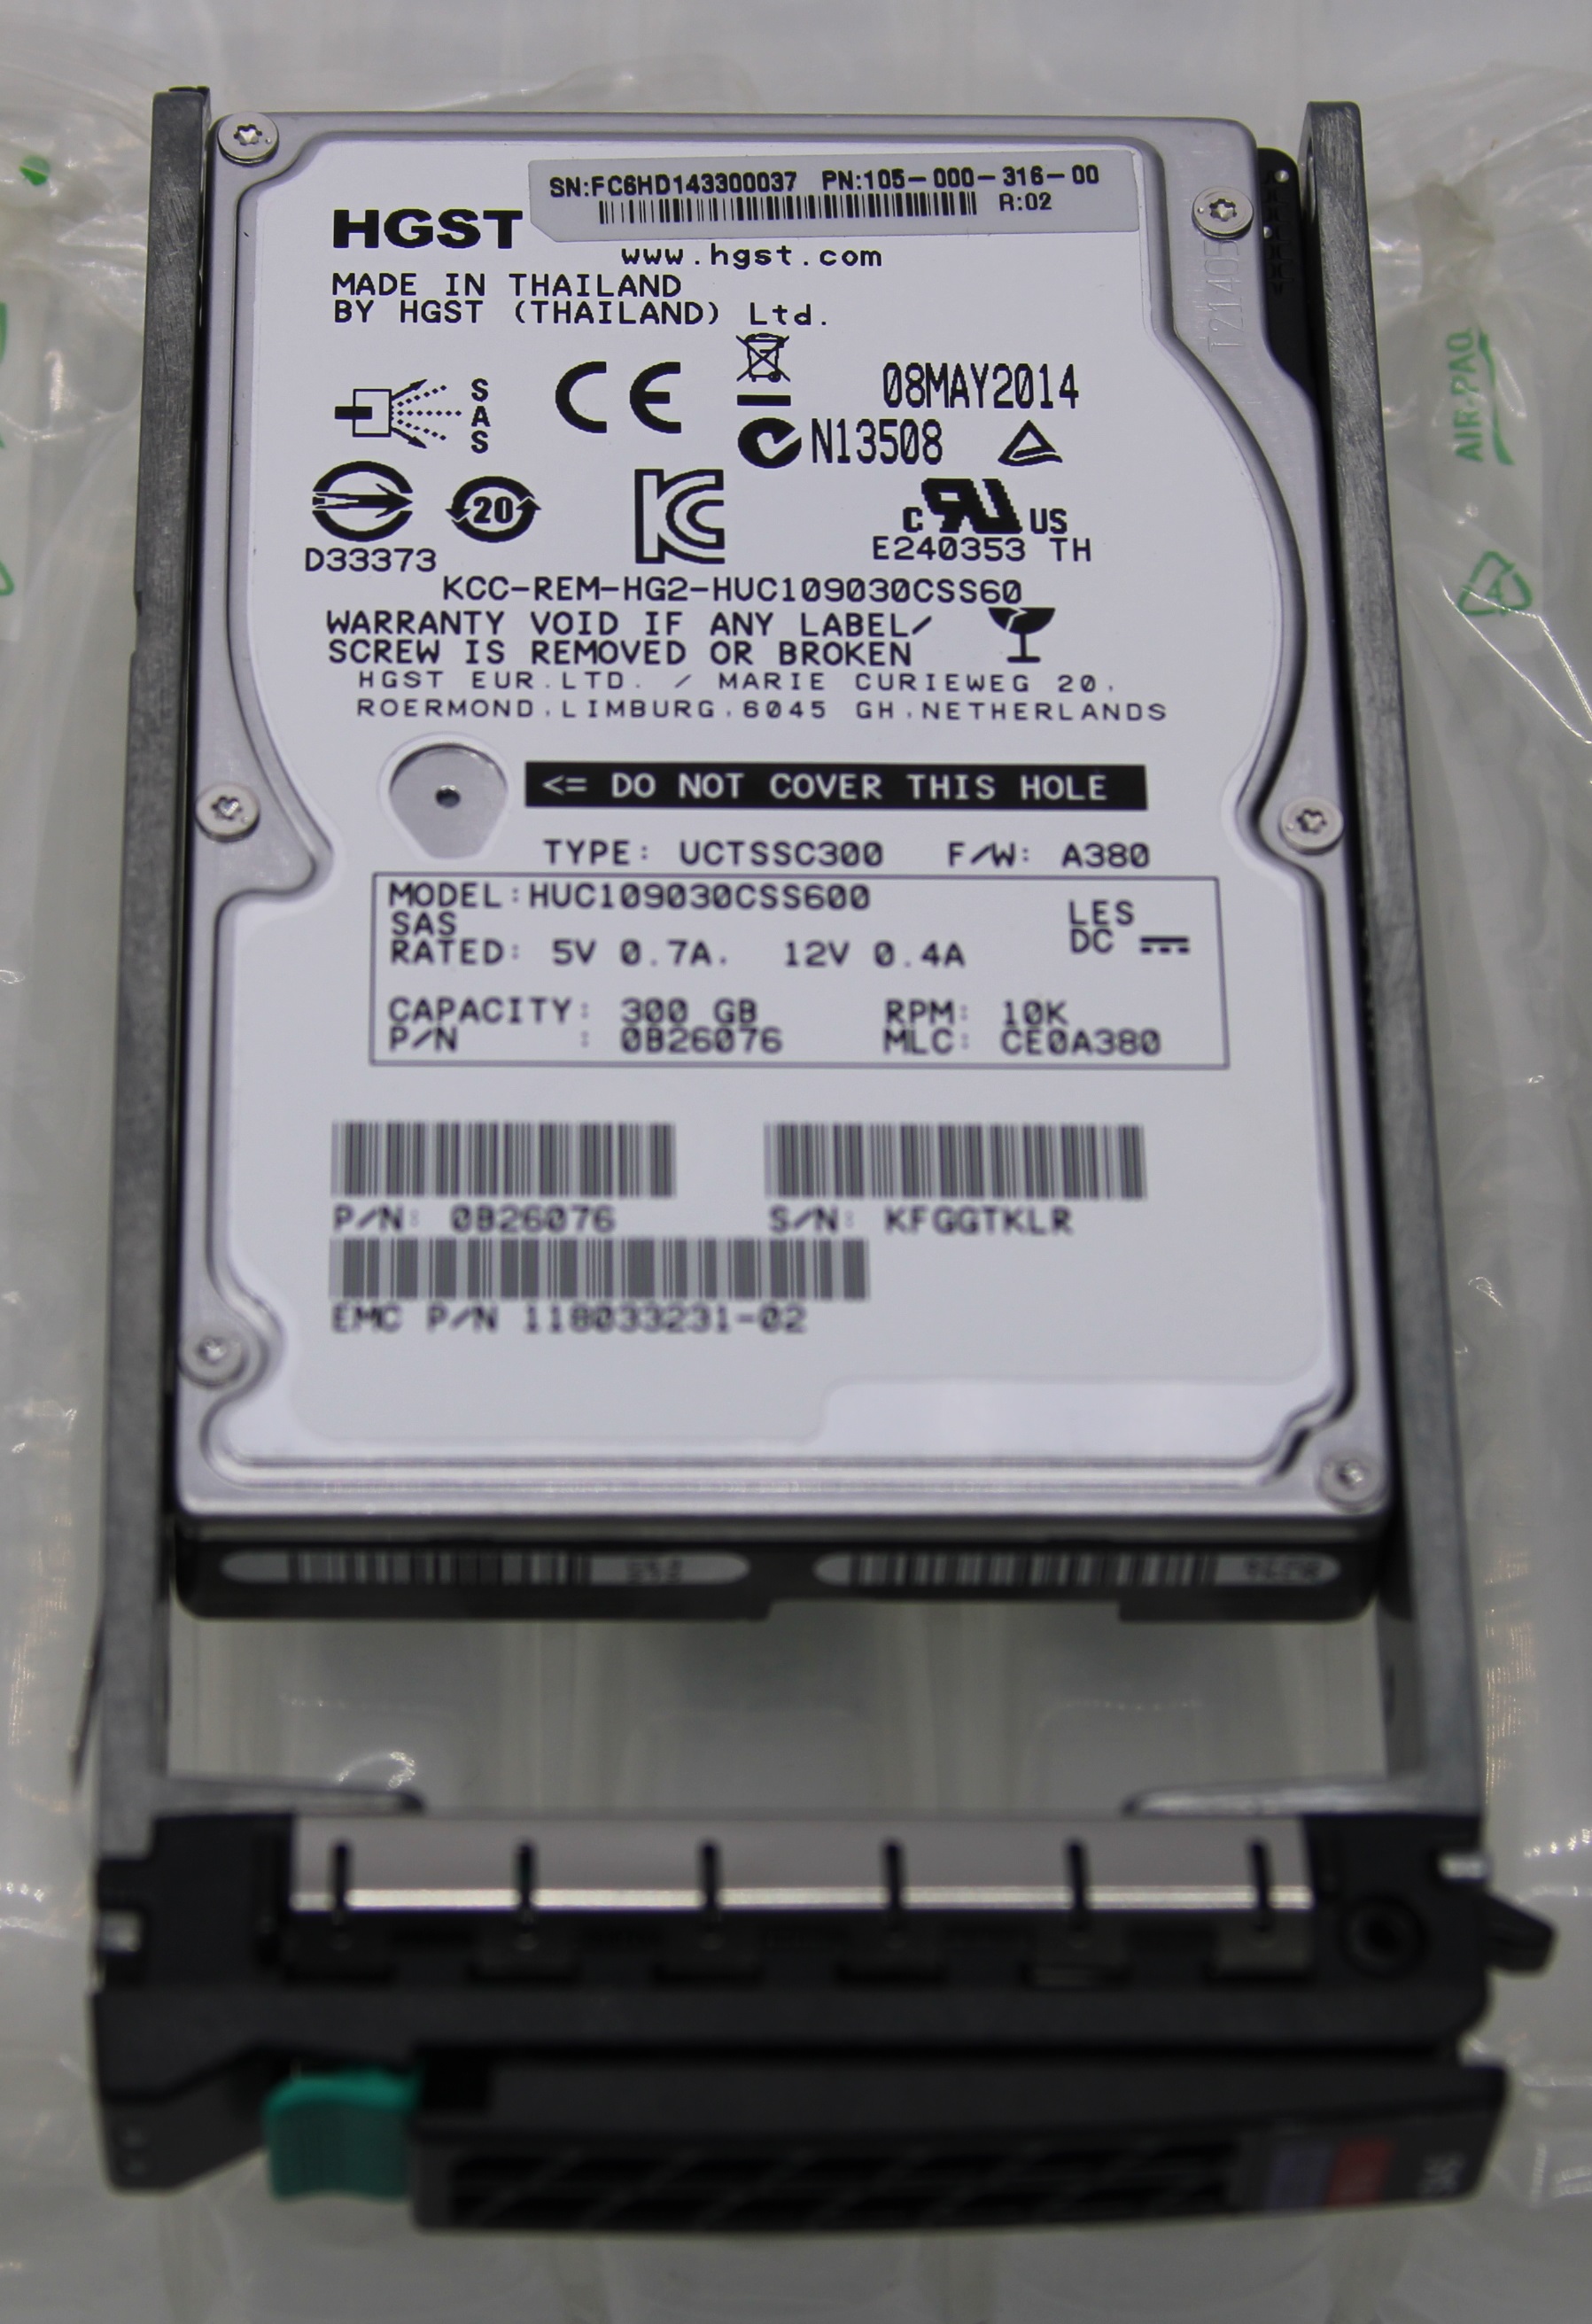 HGST 300GB EMC 10K 2.5